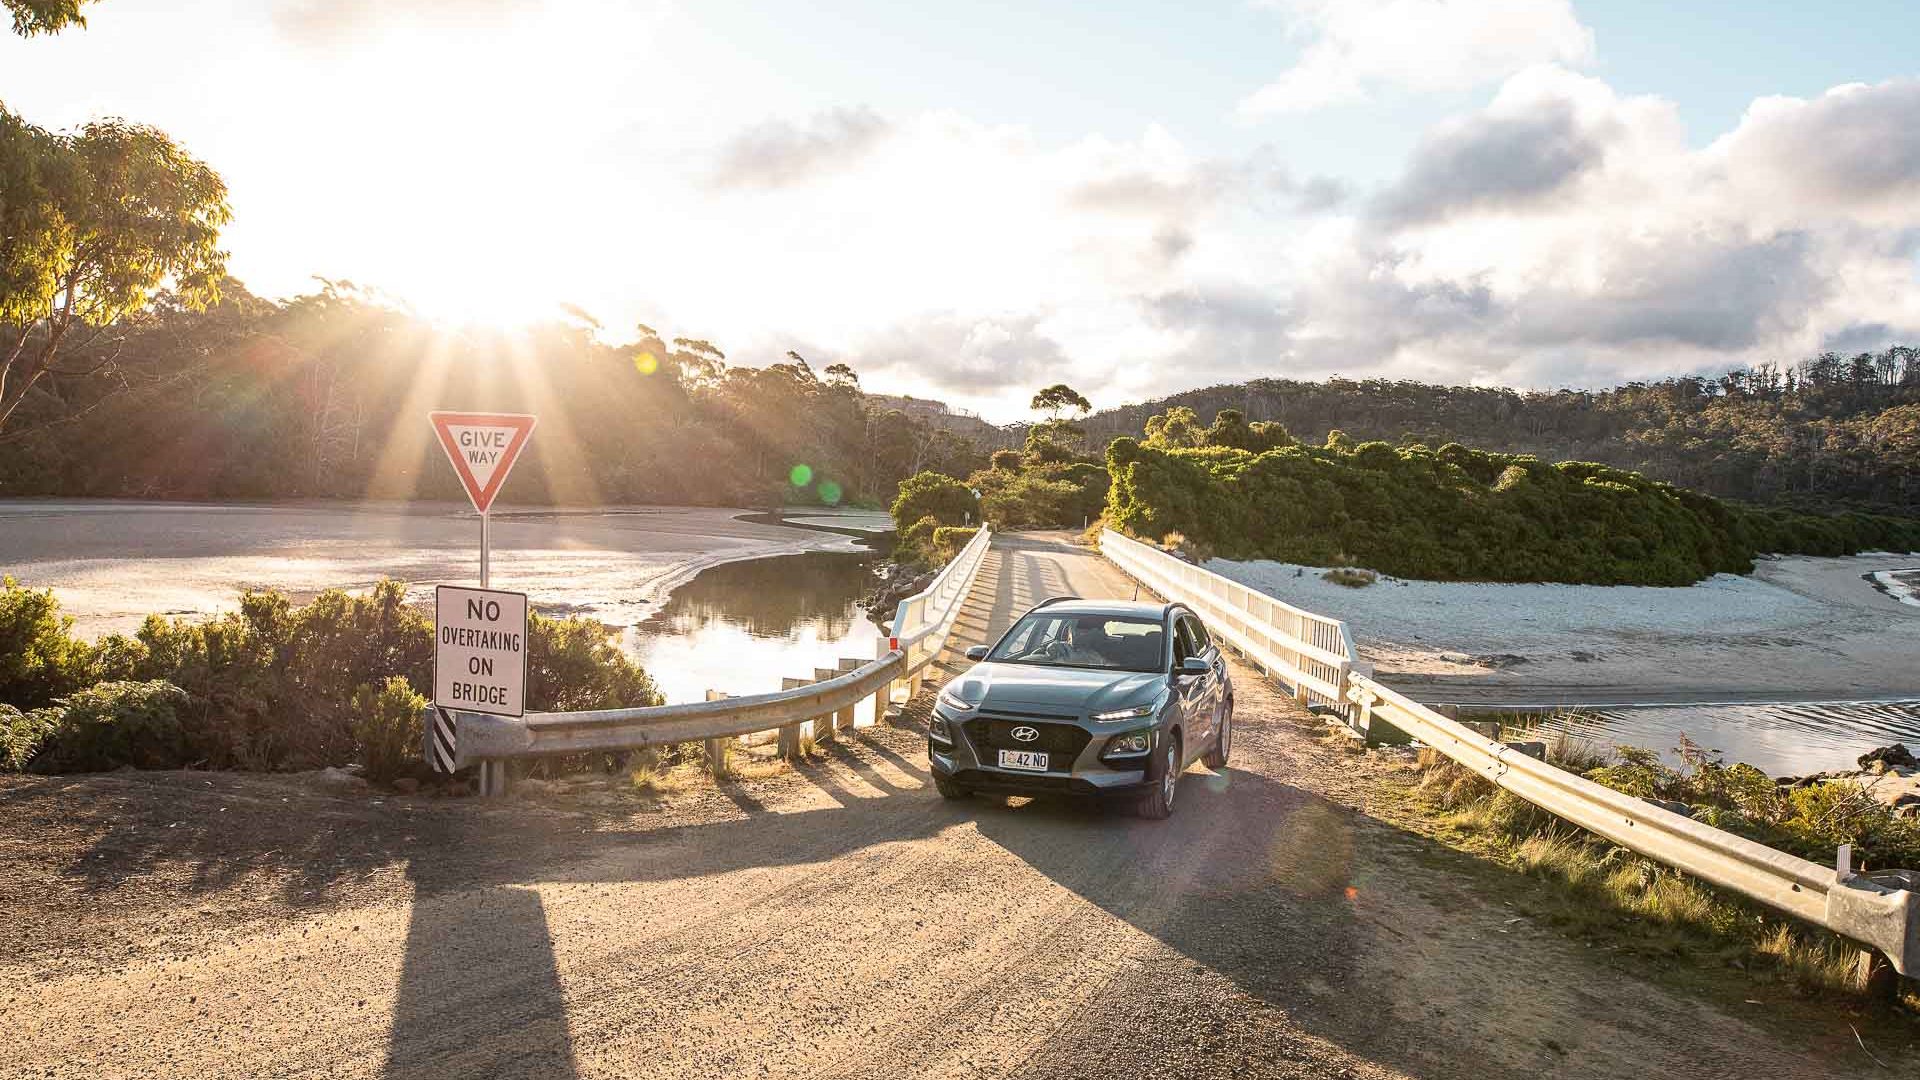 Tasmania's Southern Edge is the ideal road trip | Adventure.com